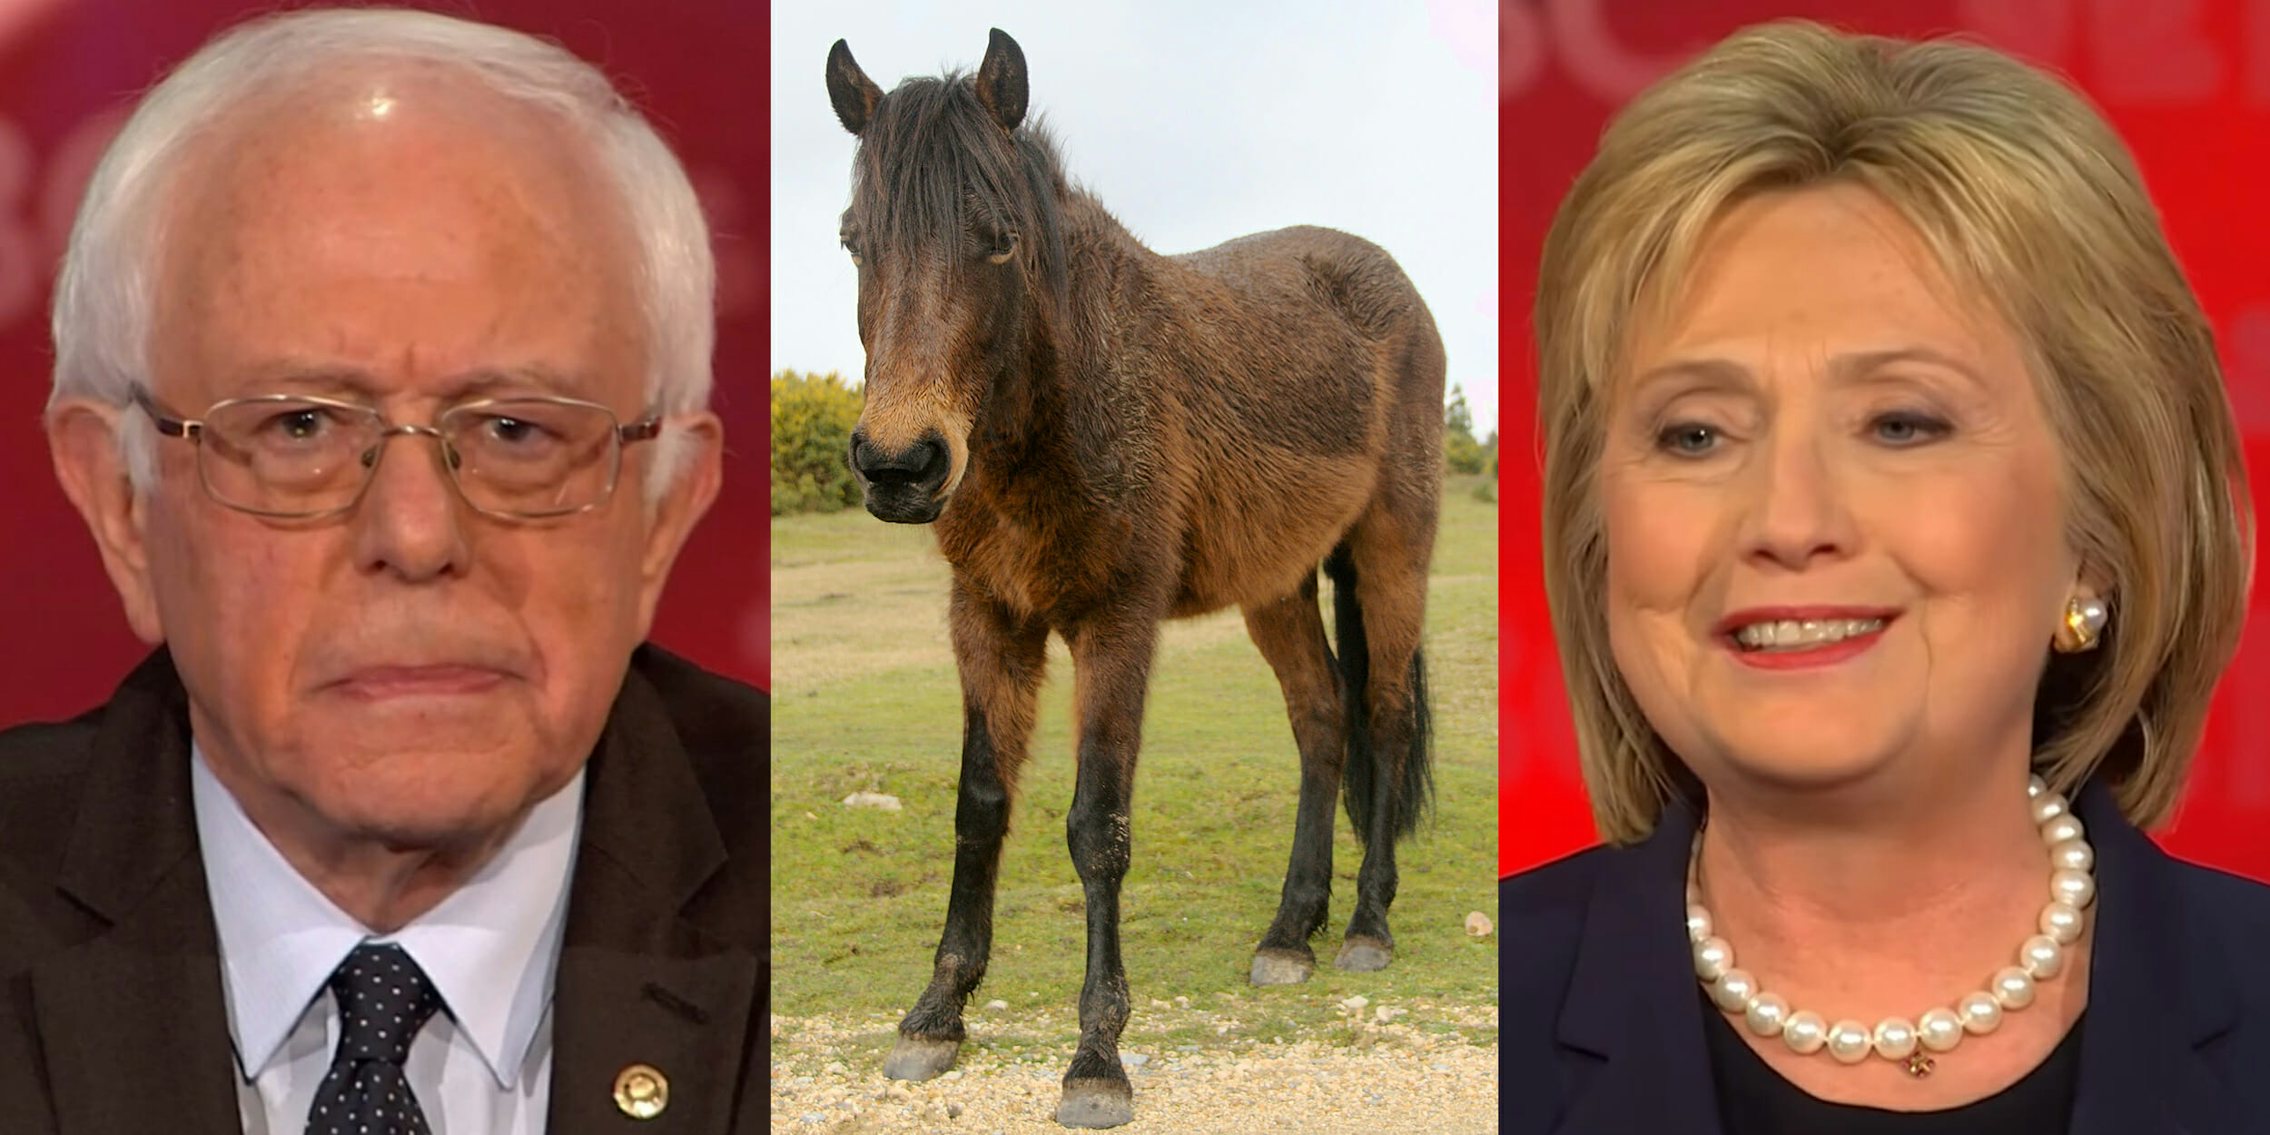 Bernie Sanders, a pony, and Hillary Clinton